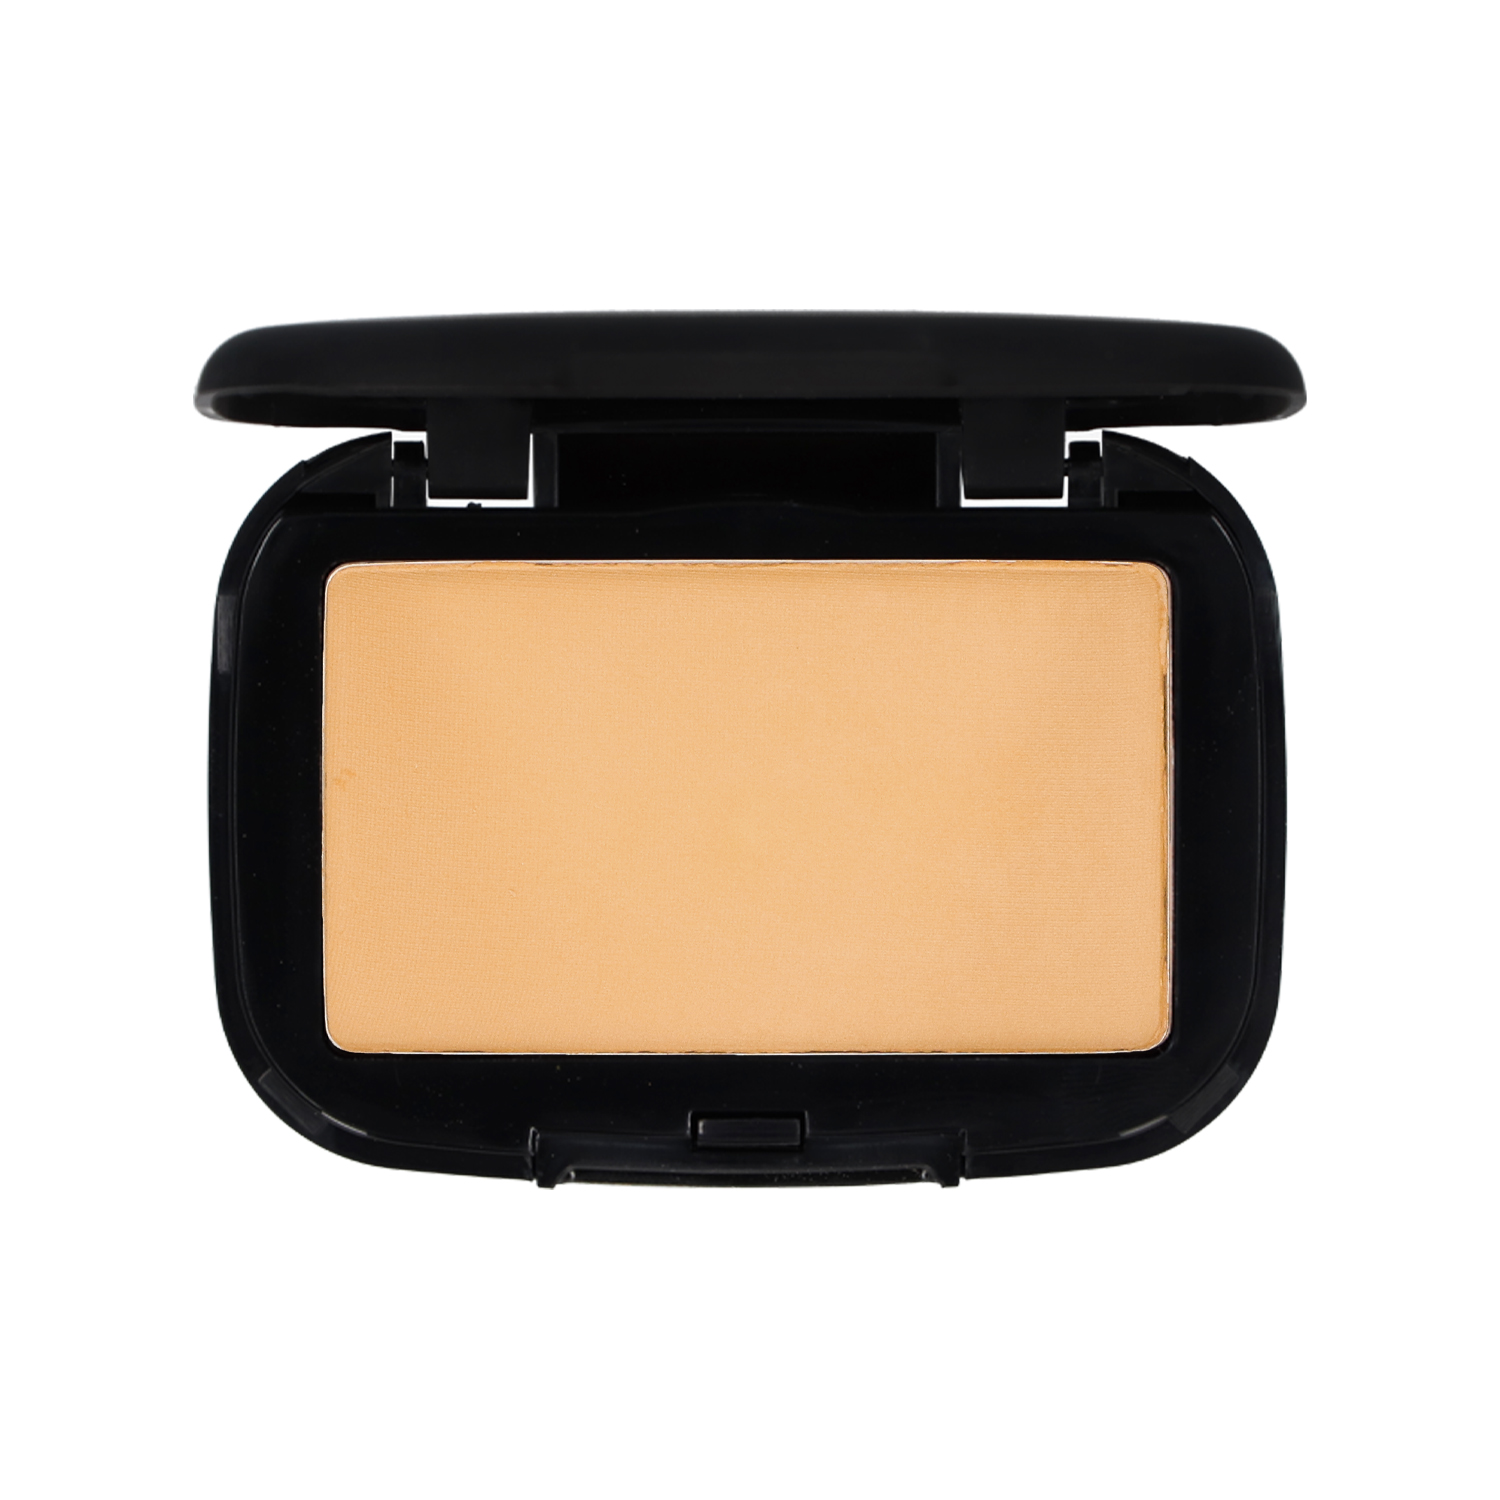 Make-up Studio Compact Powder make-up Poeder - Yellow Beige